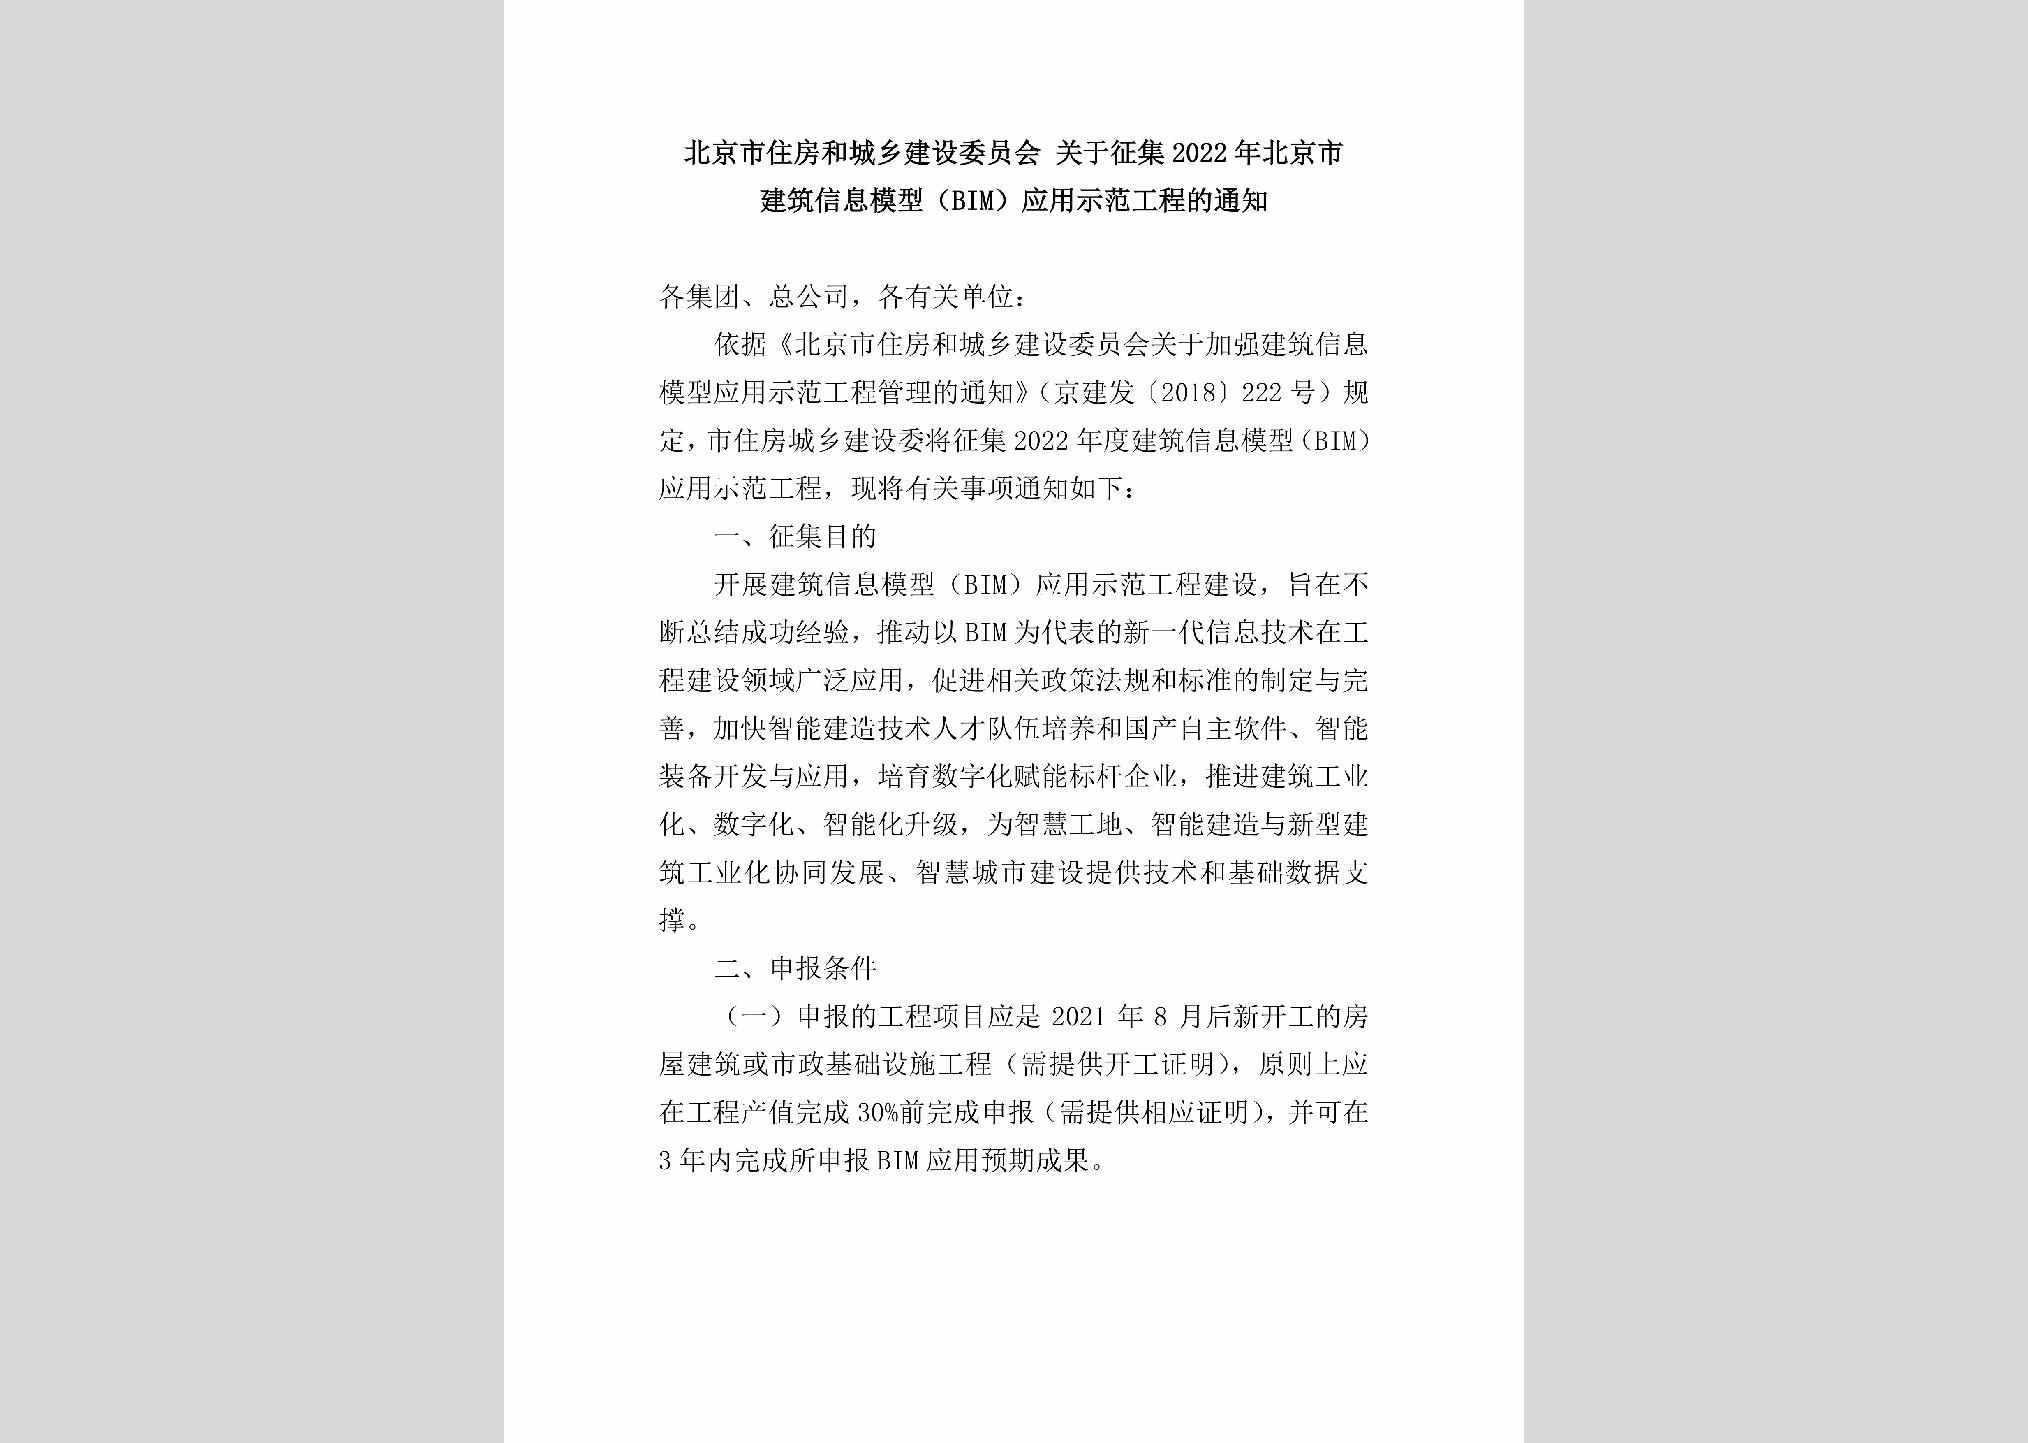 BJ-MXYYSFGC-2022：北京市住房和城乡建设委员会关于征集2022年北京市建筑信息模型（BIM）应用示范工程的通知